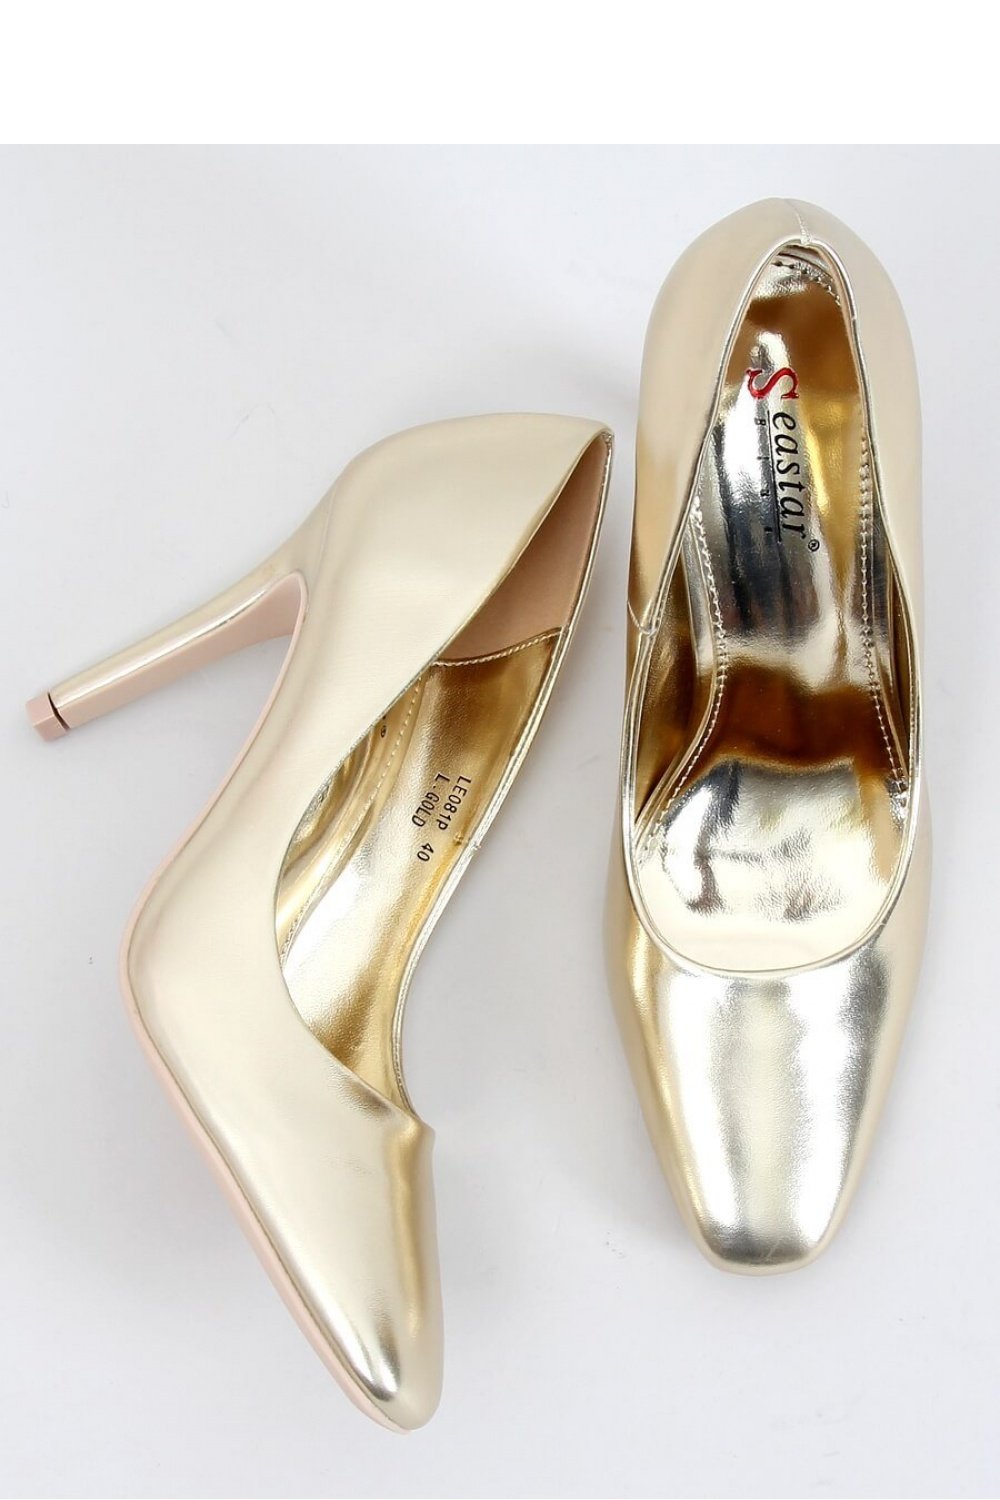 High heels model 153358 Inello Posh Styles Apparel